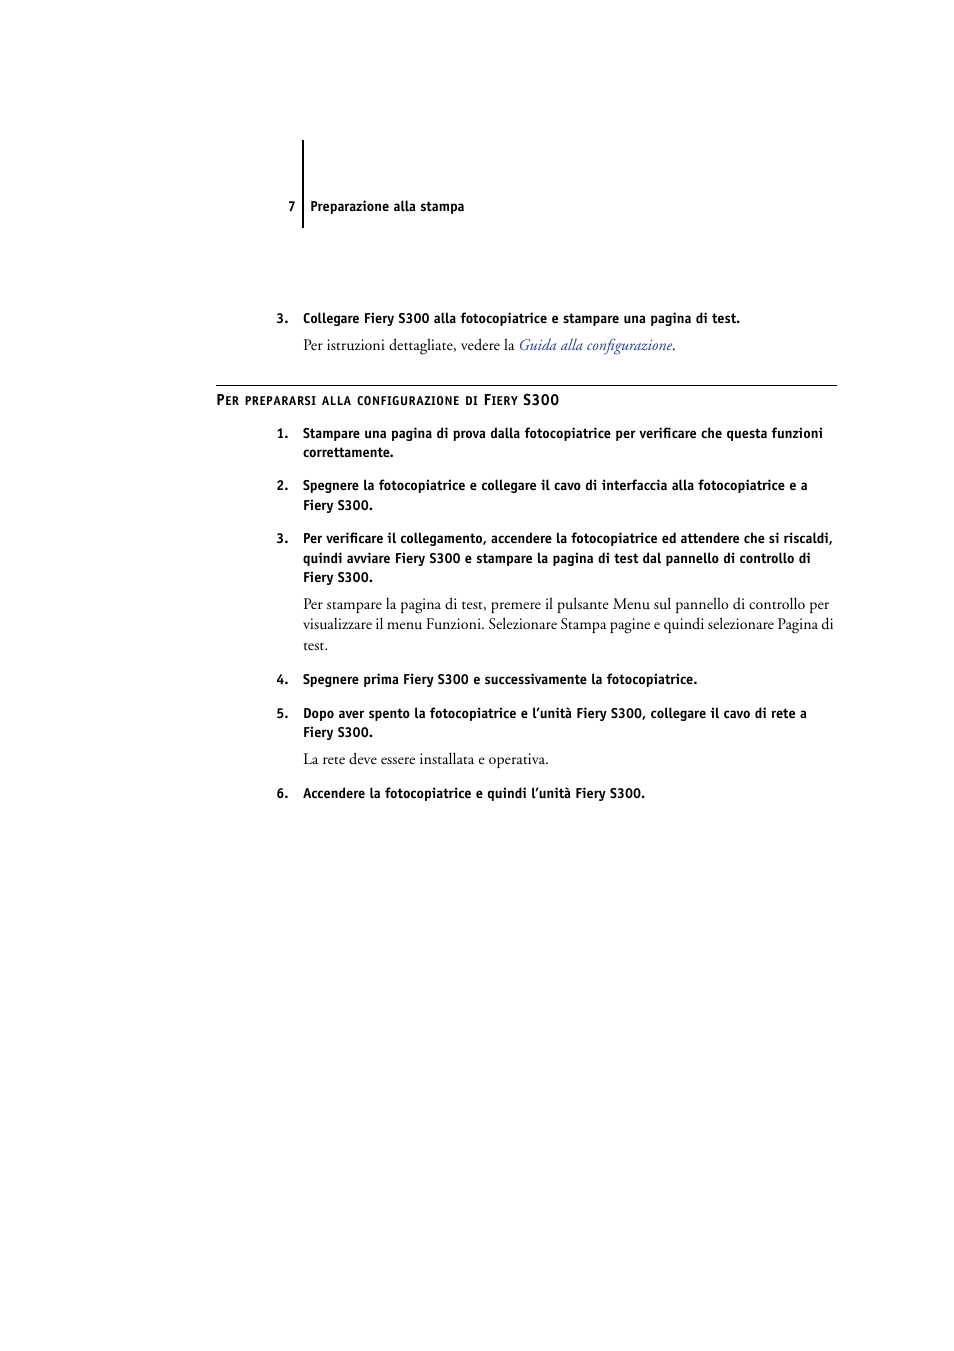 Konica Minolta CN5001Pro Manuale d'uso | Pagina 7 / 16